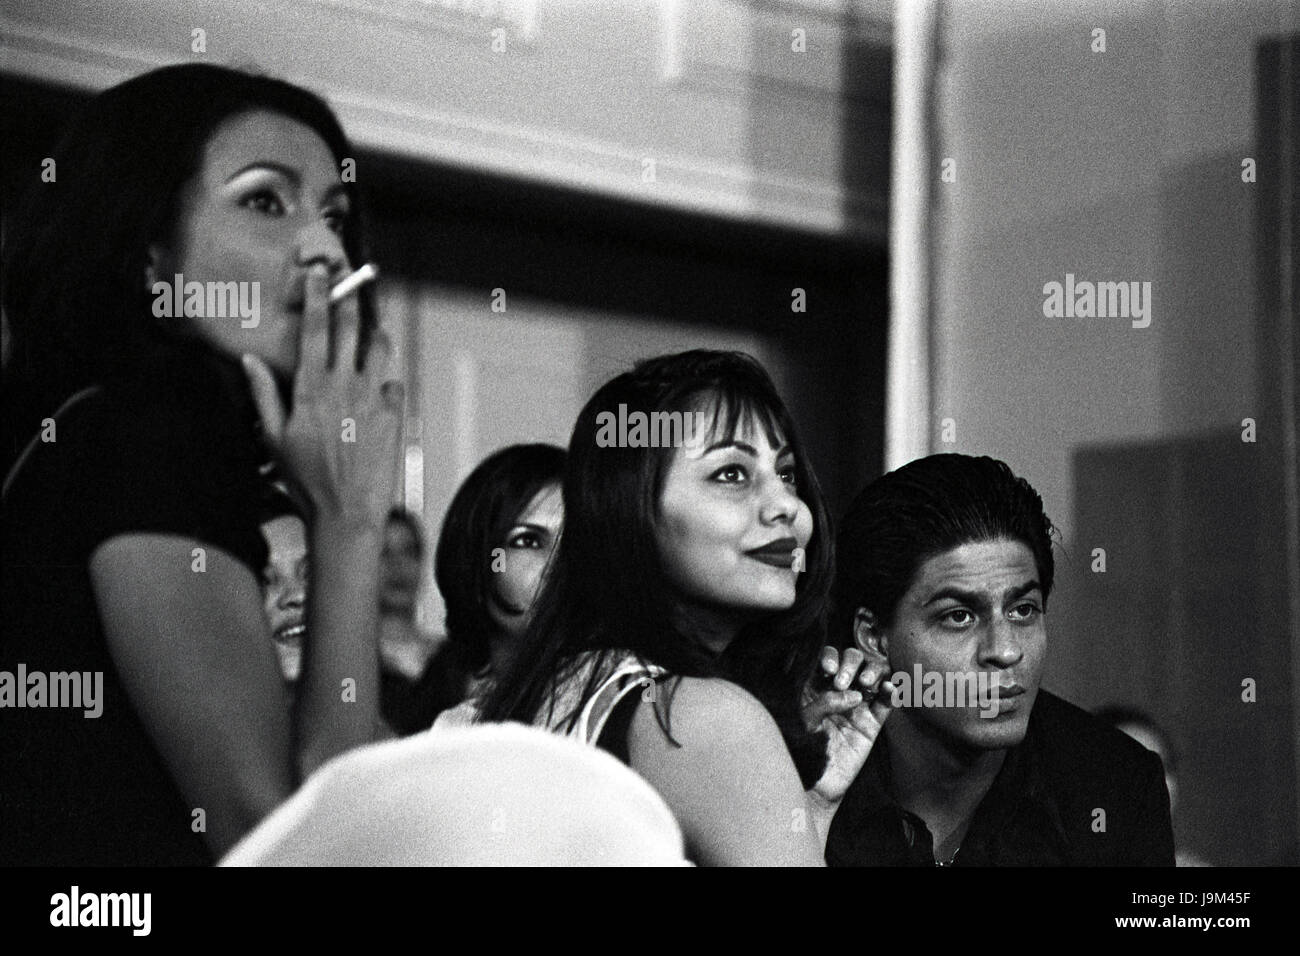 Indian bollywood actor, Shahrukh Khan and Gauri khan, India, Asia, NOMR Stock Photo